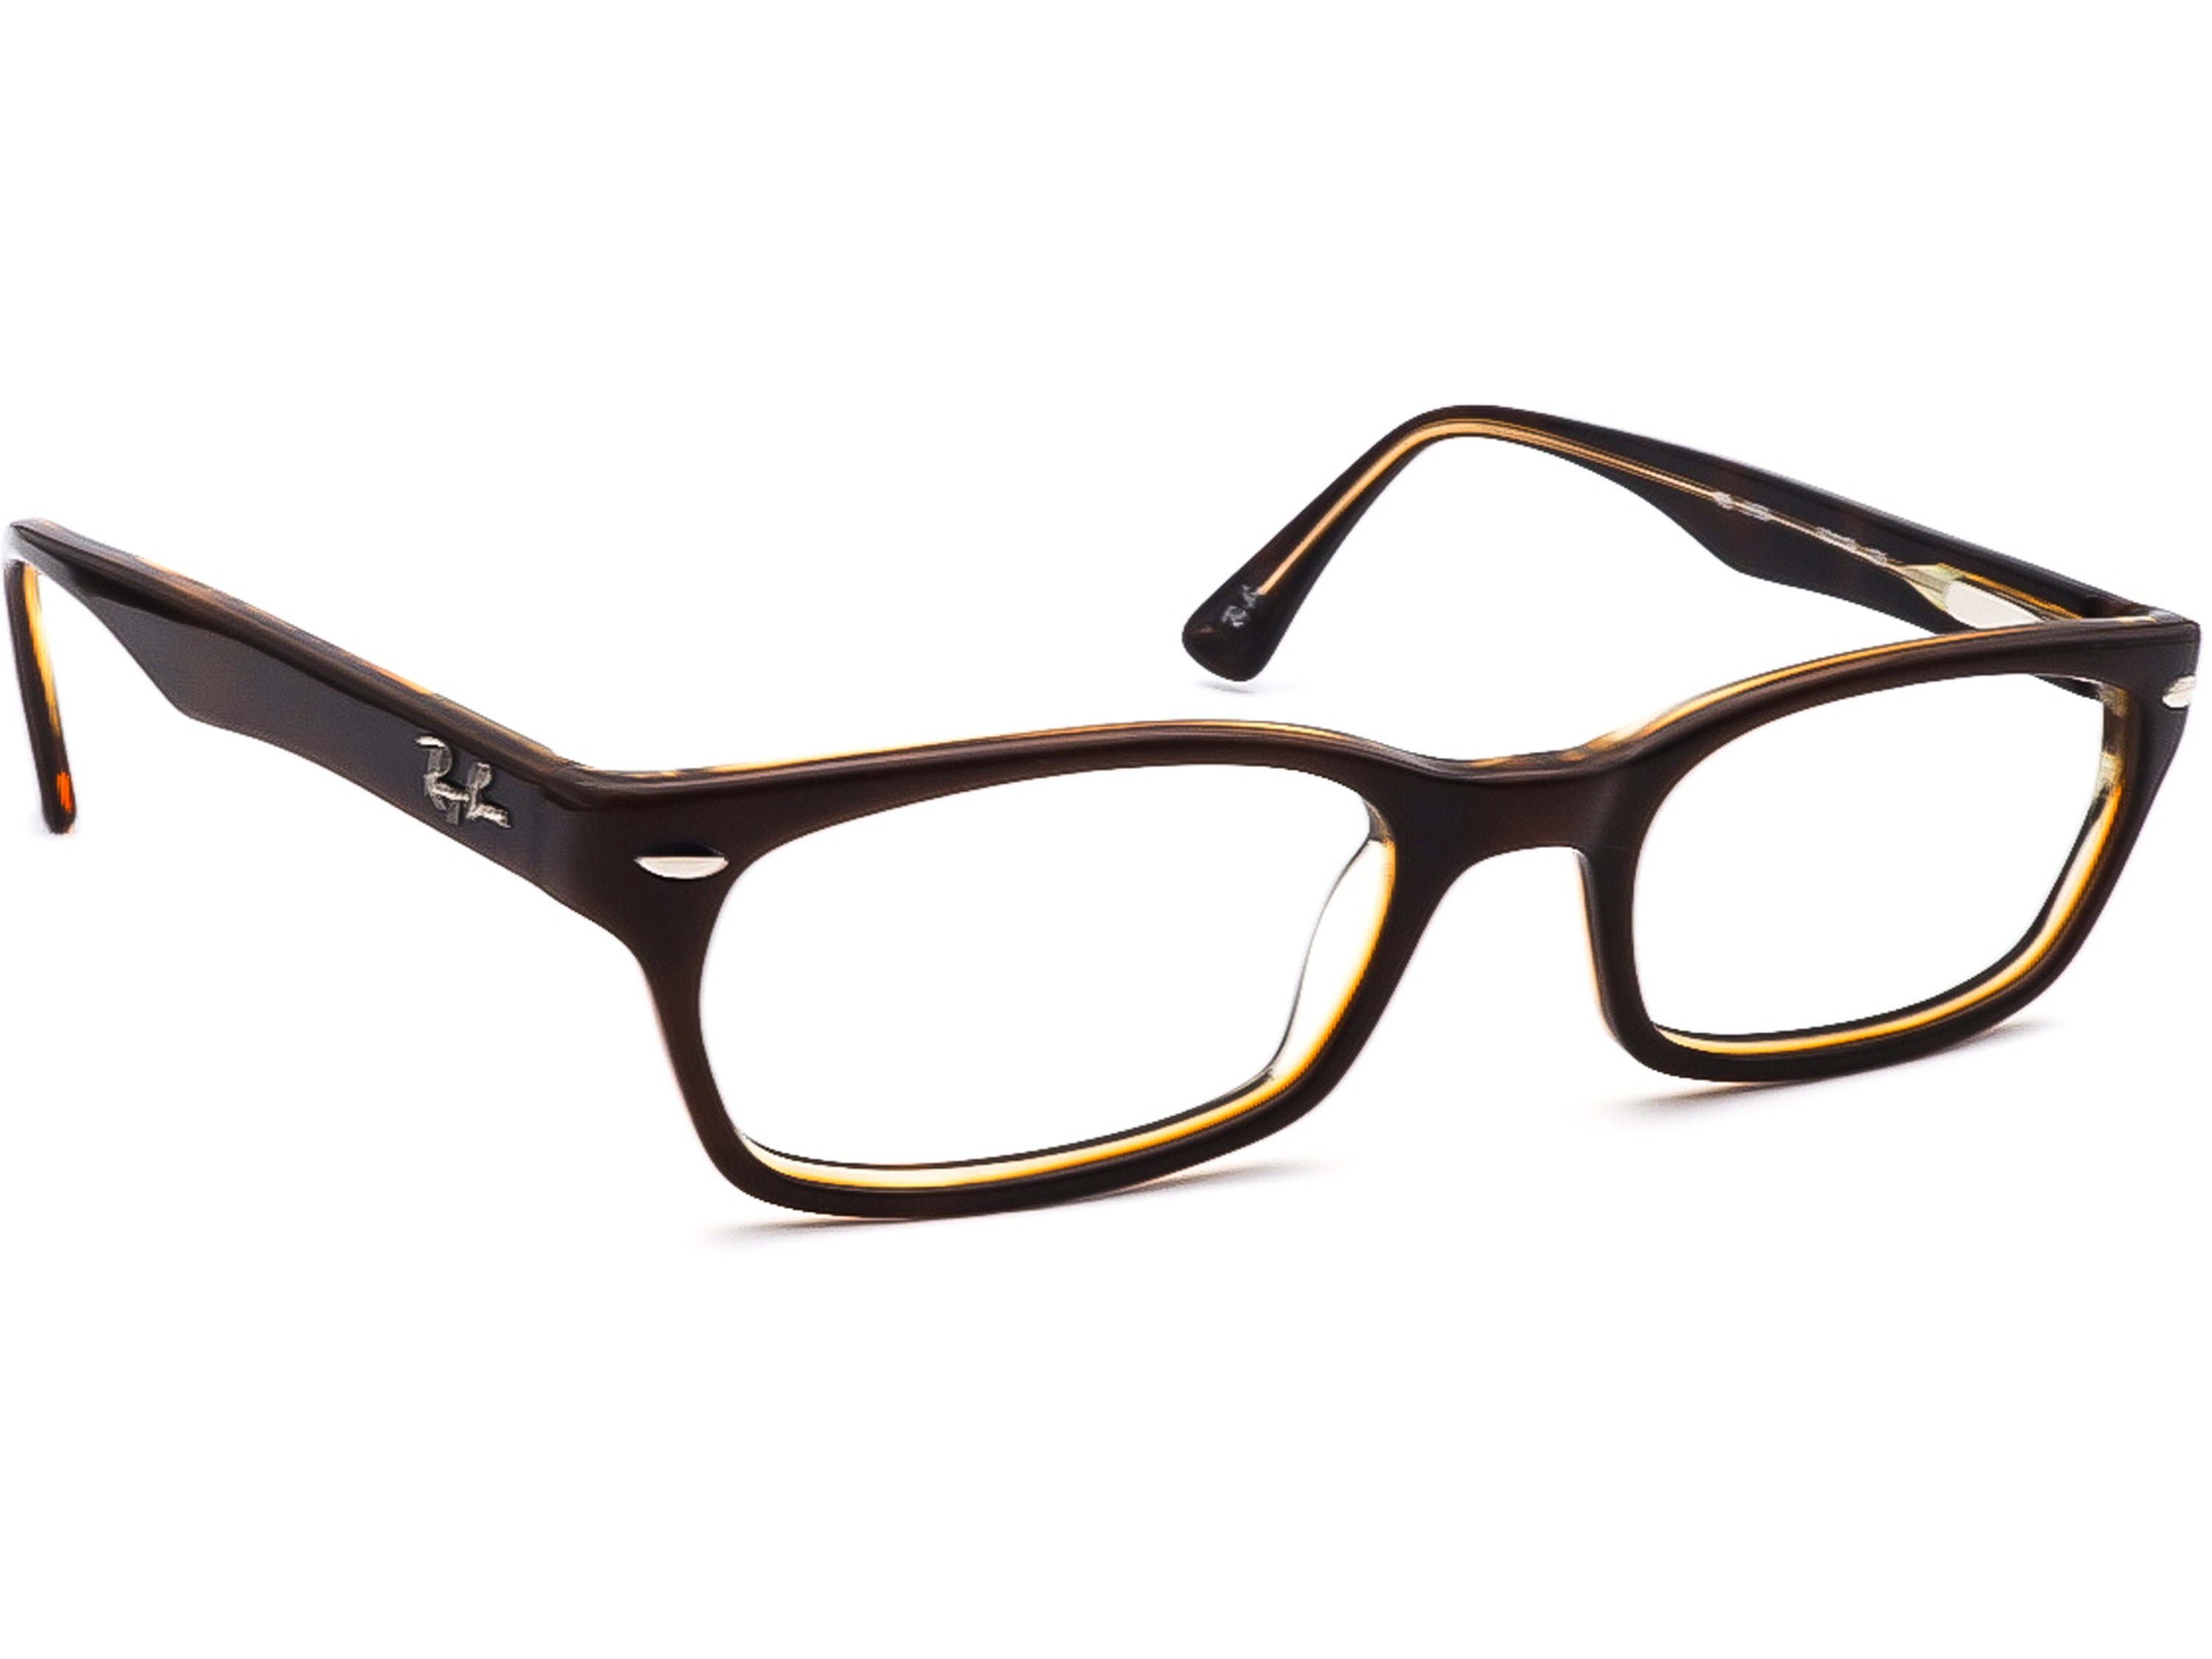 Ray-ban Eyeglasses RB 5150 2019 Brown on Tortoise Rectangular - Etsy